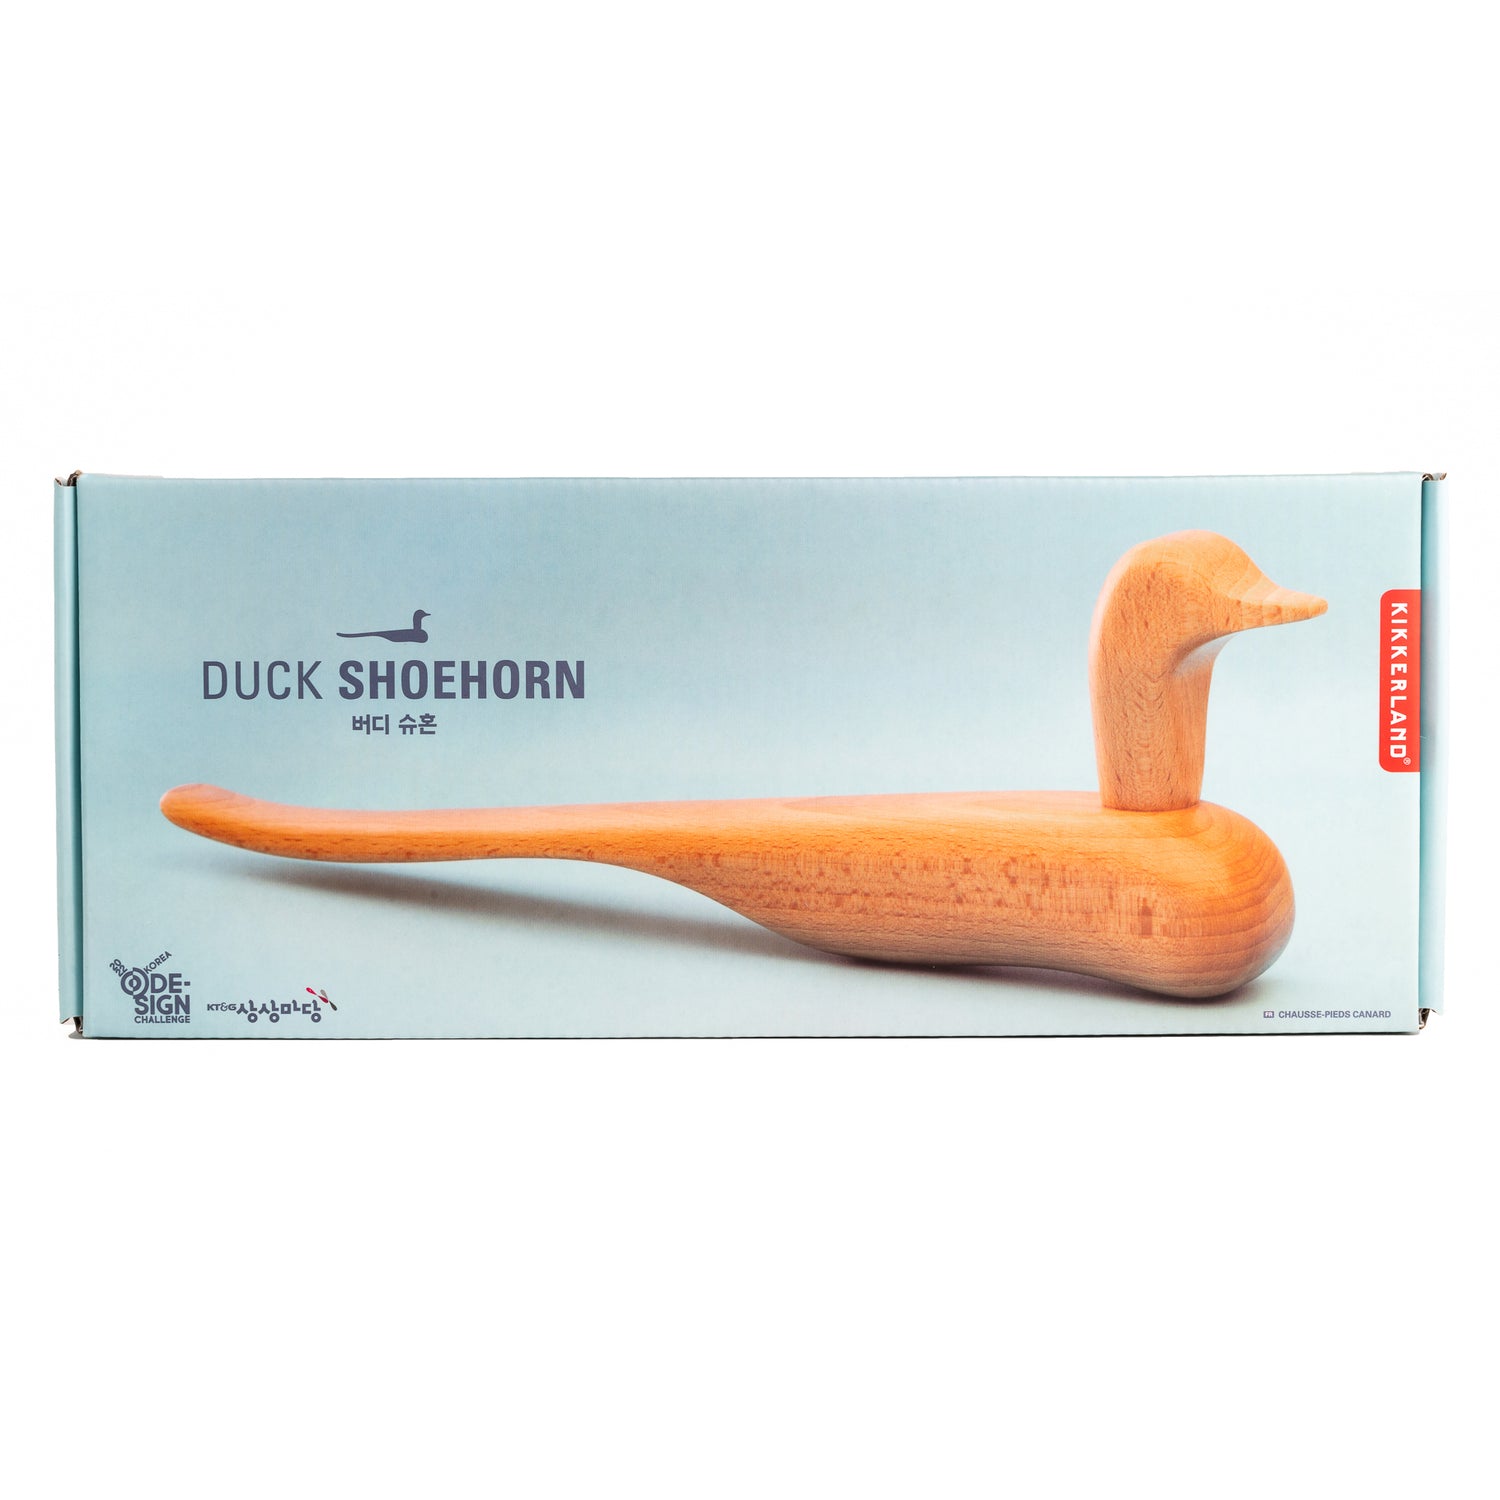 Duck Shoehorn